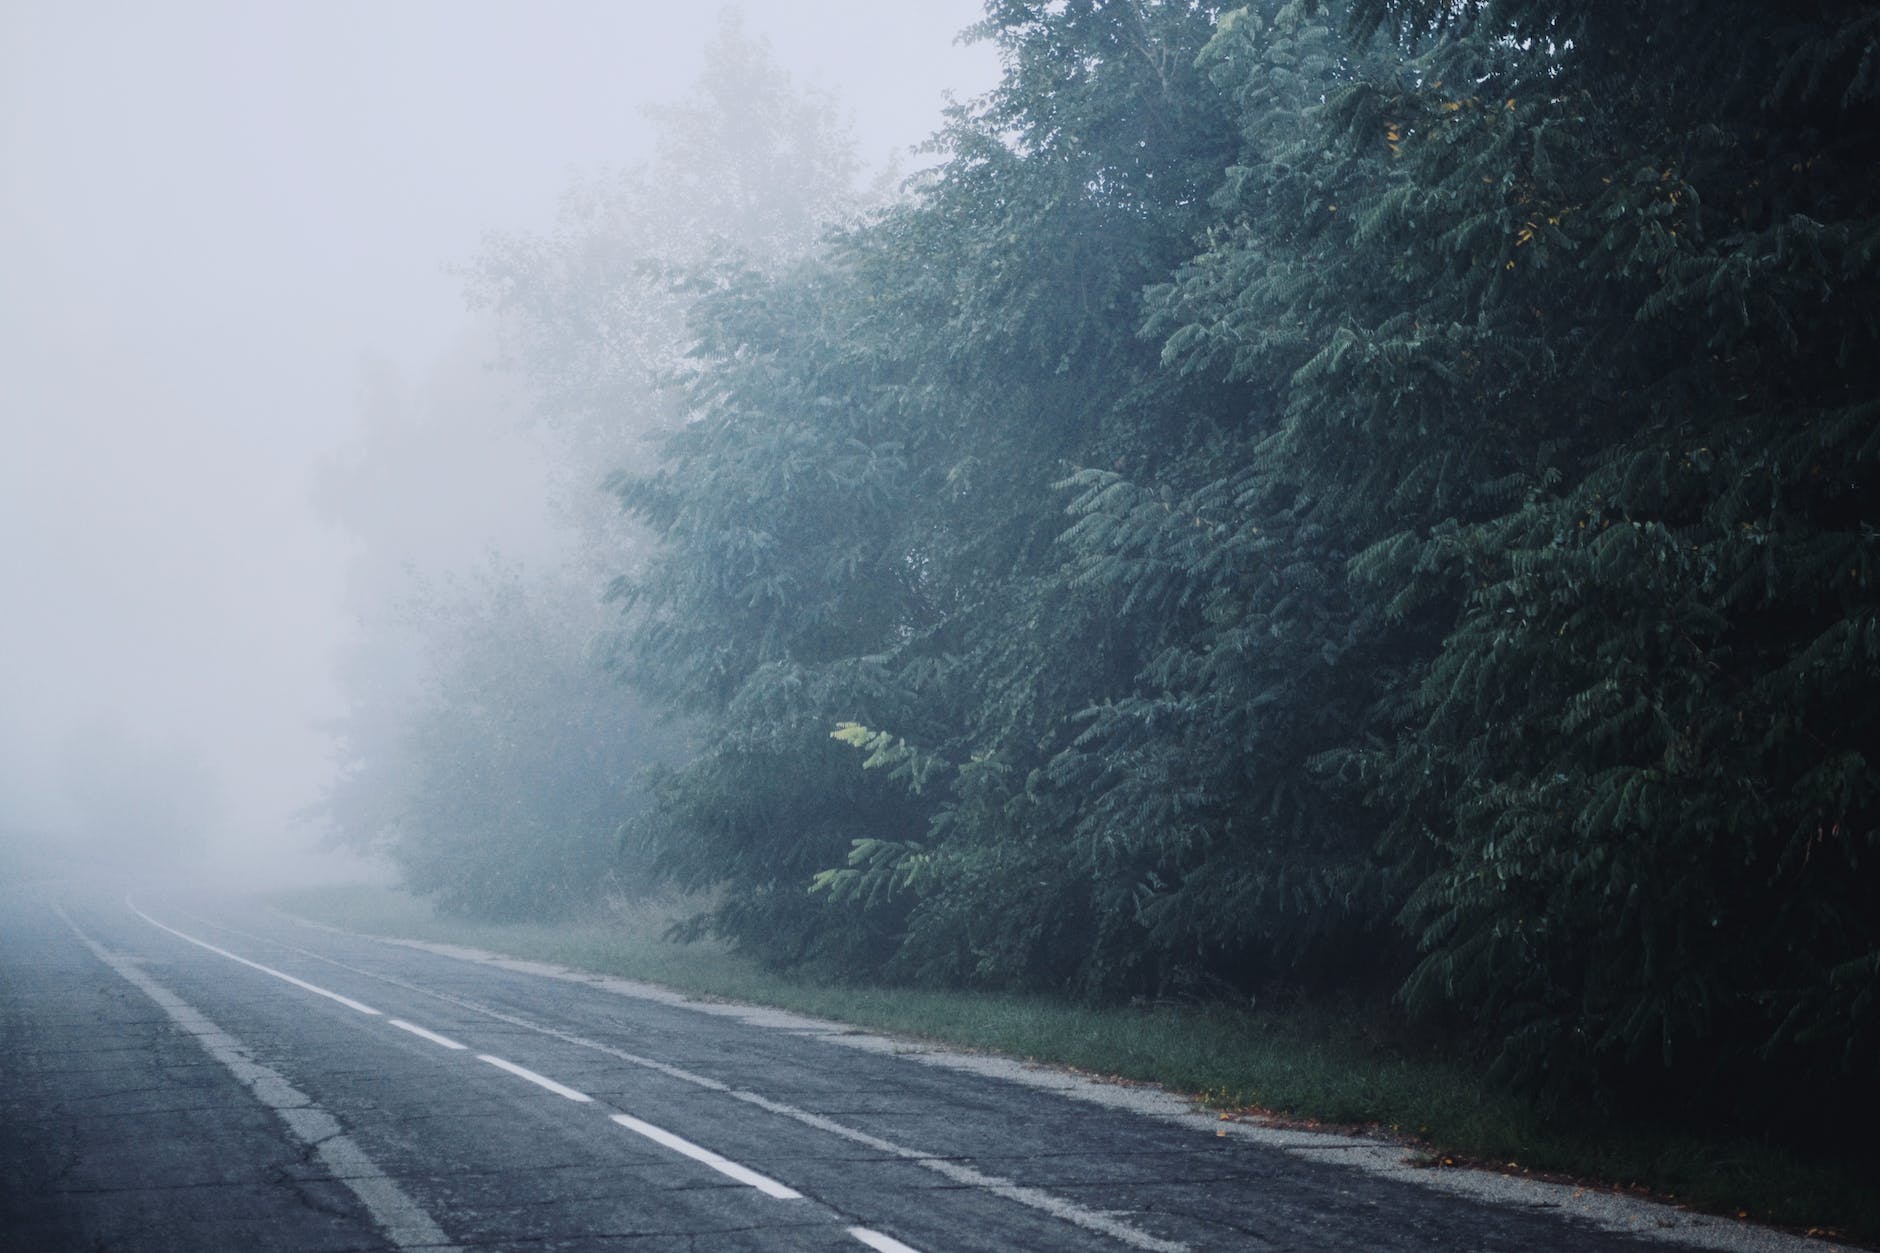 coniferous trees along an asphalt road in a fog